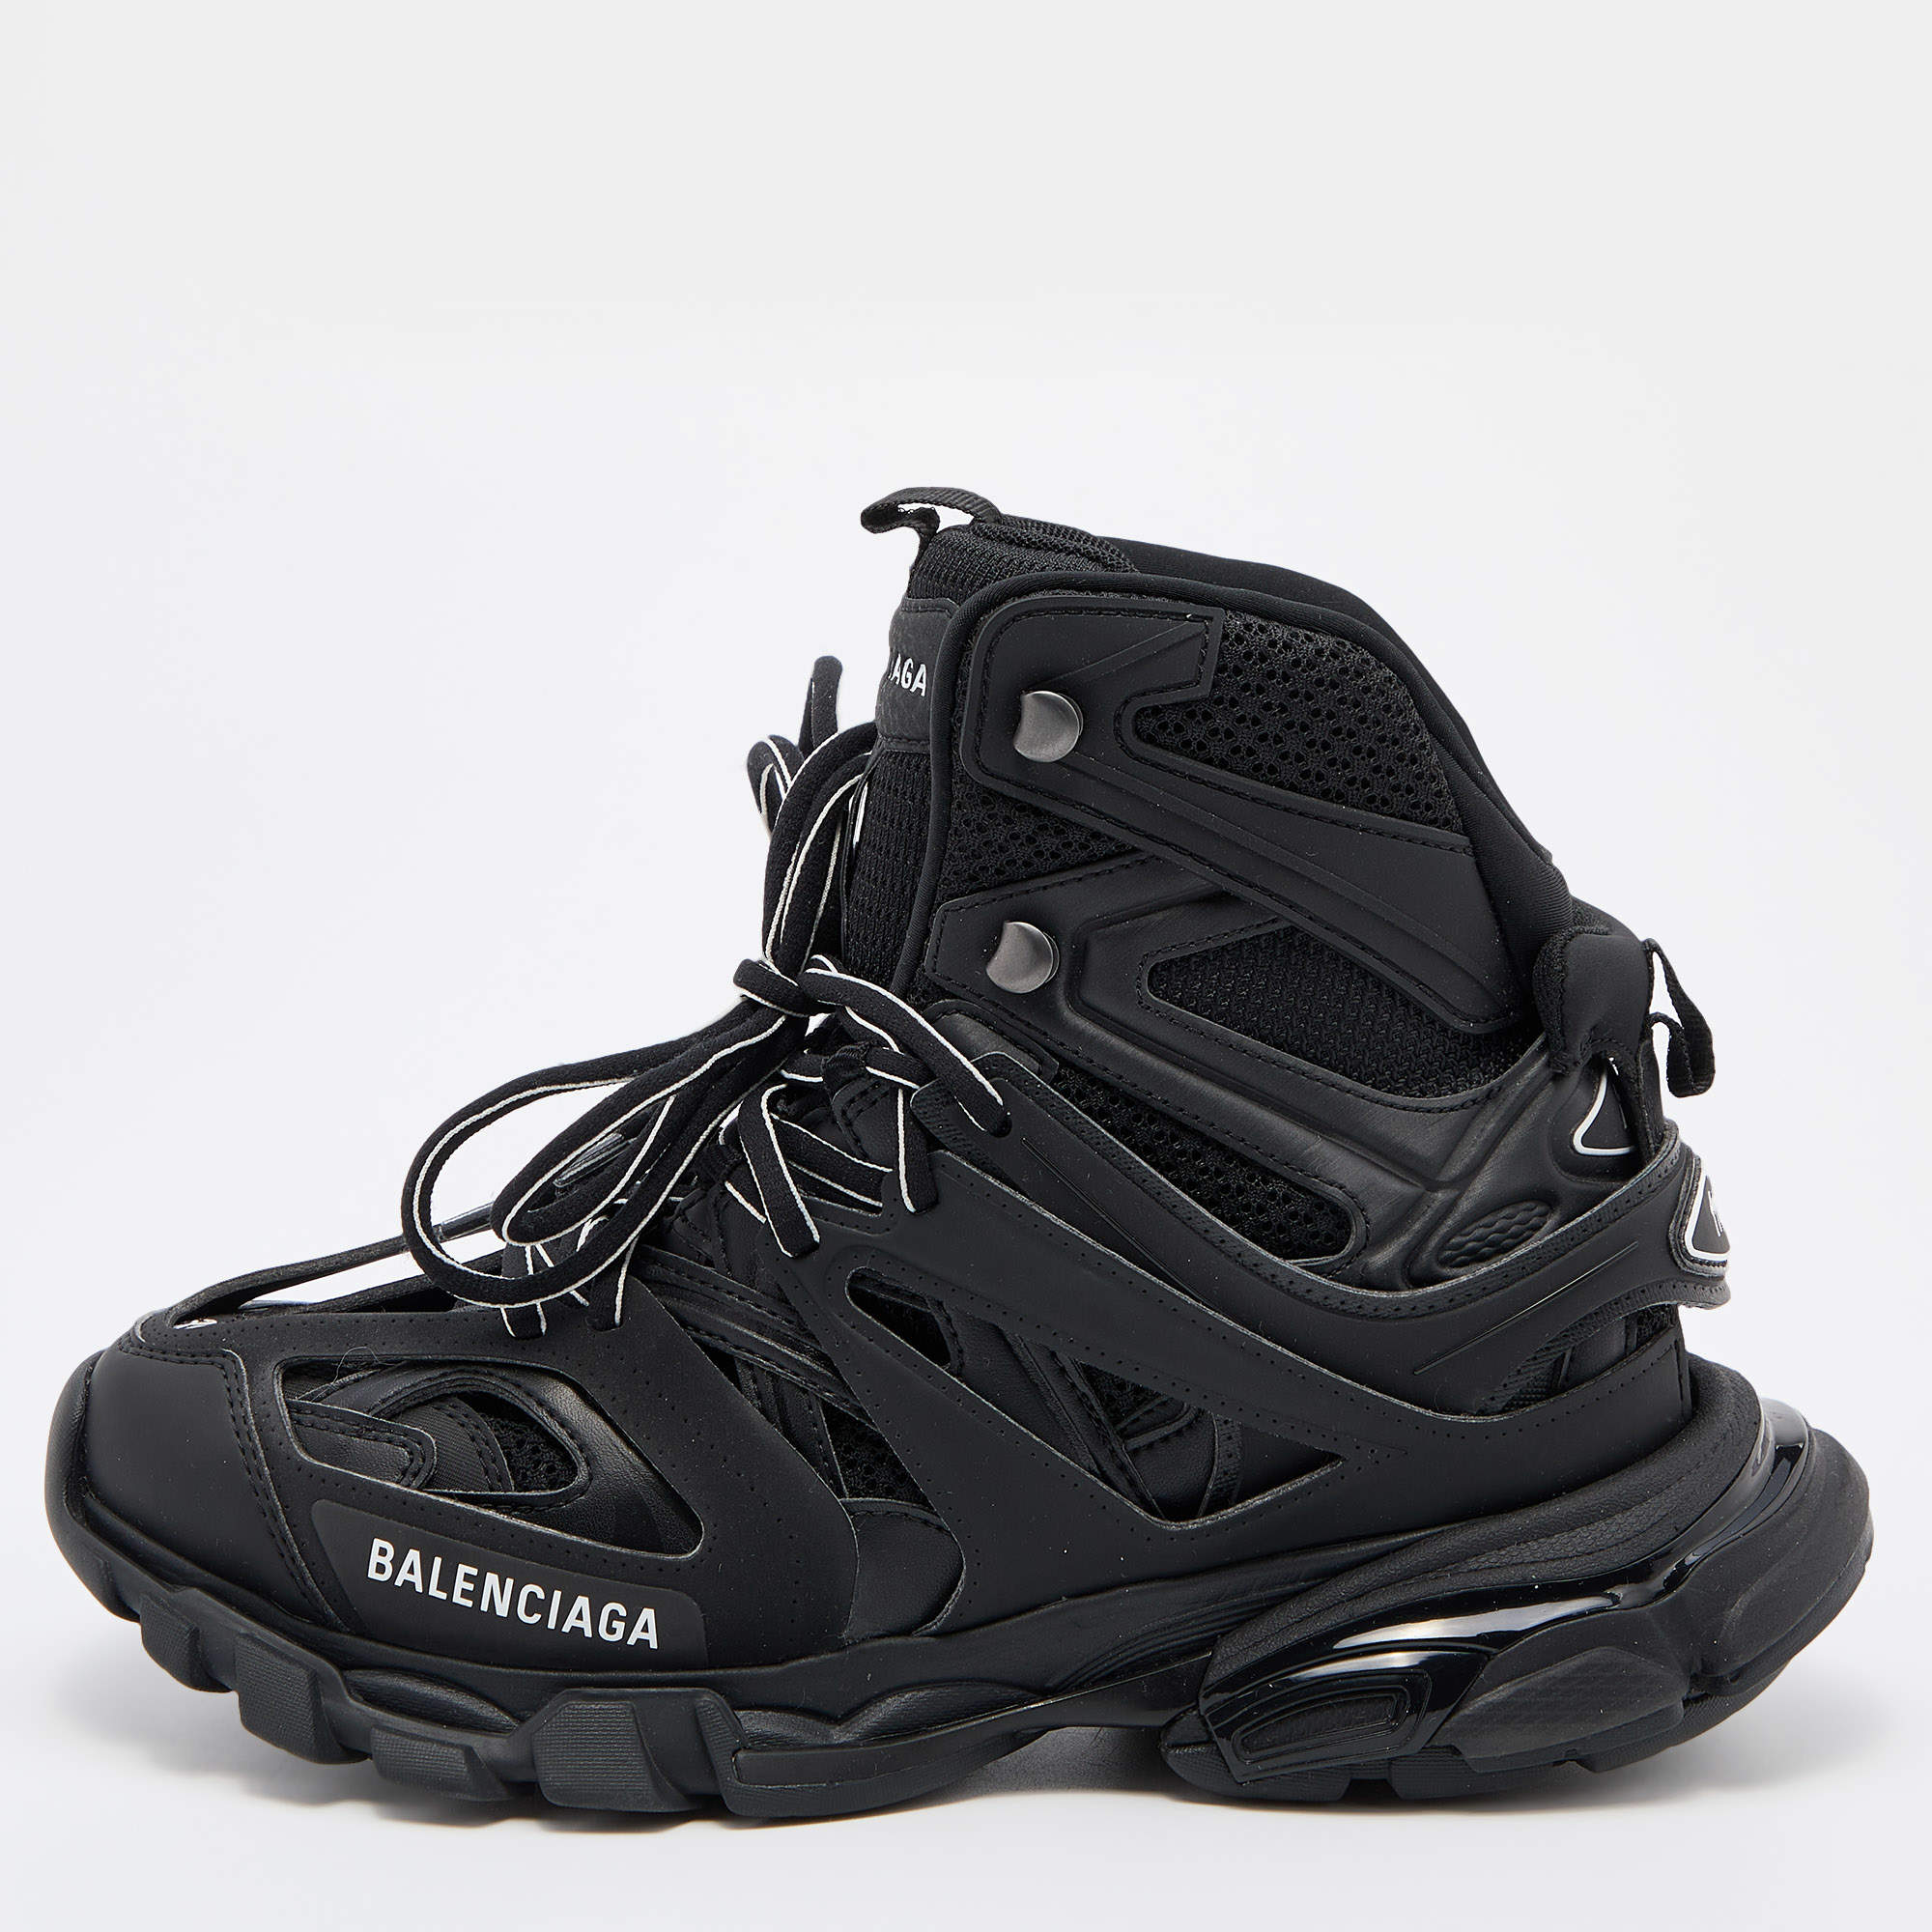 Balenciaga Triple S Black 2019  Black sneakers Balenciaga shoes mens Balenciaga  black